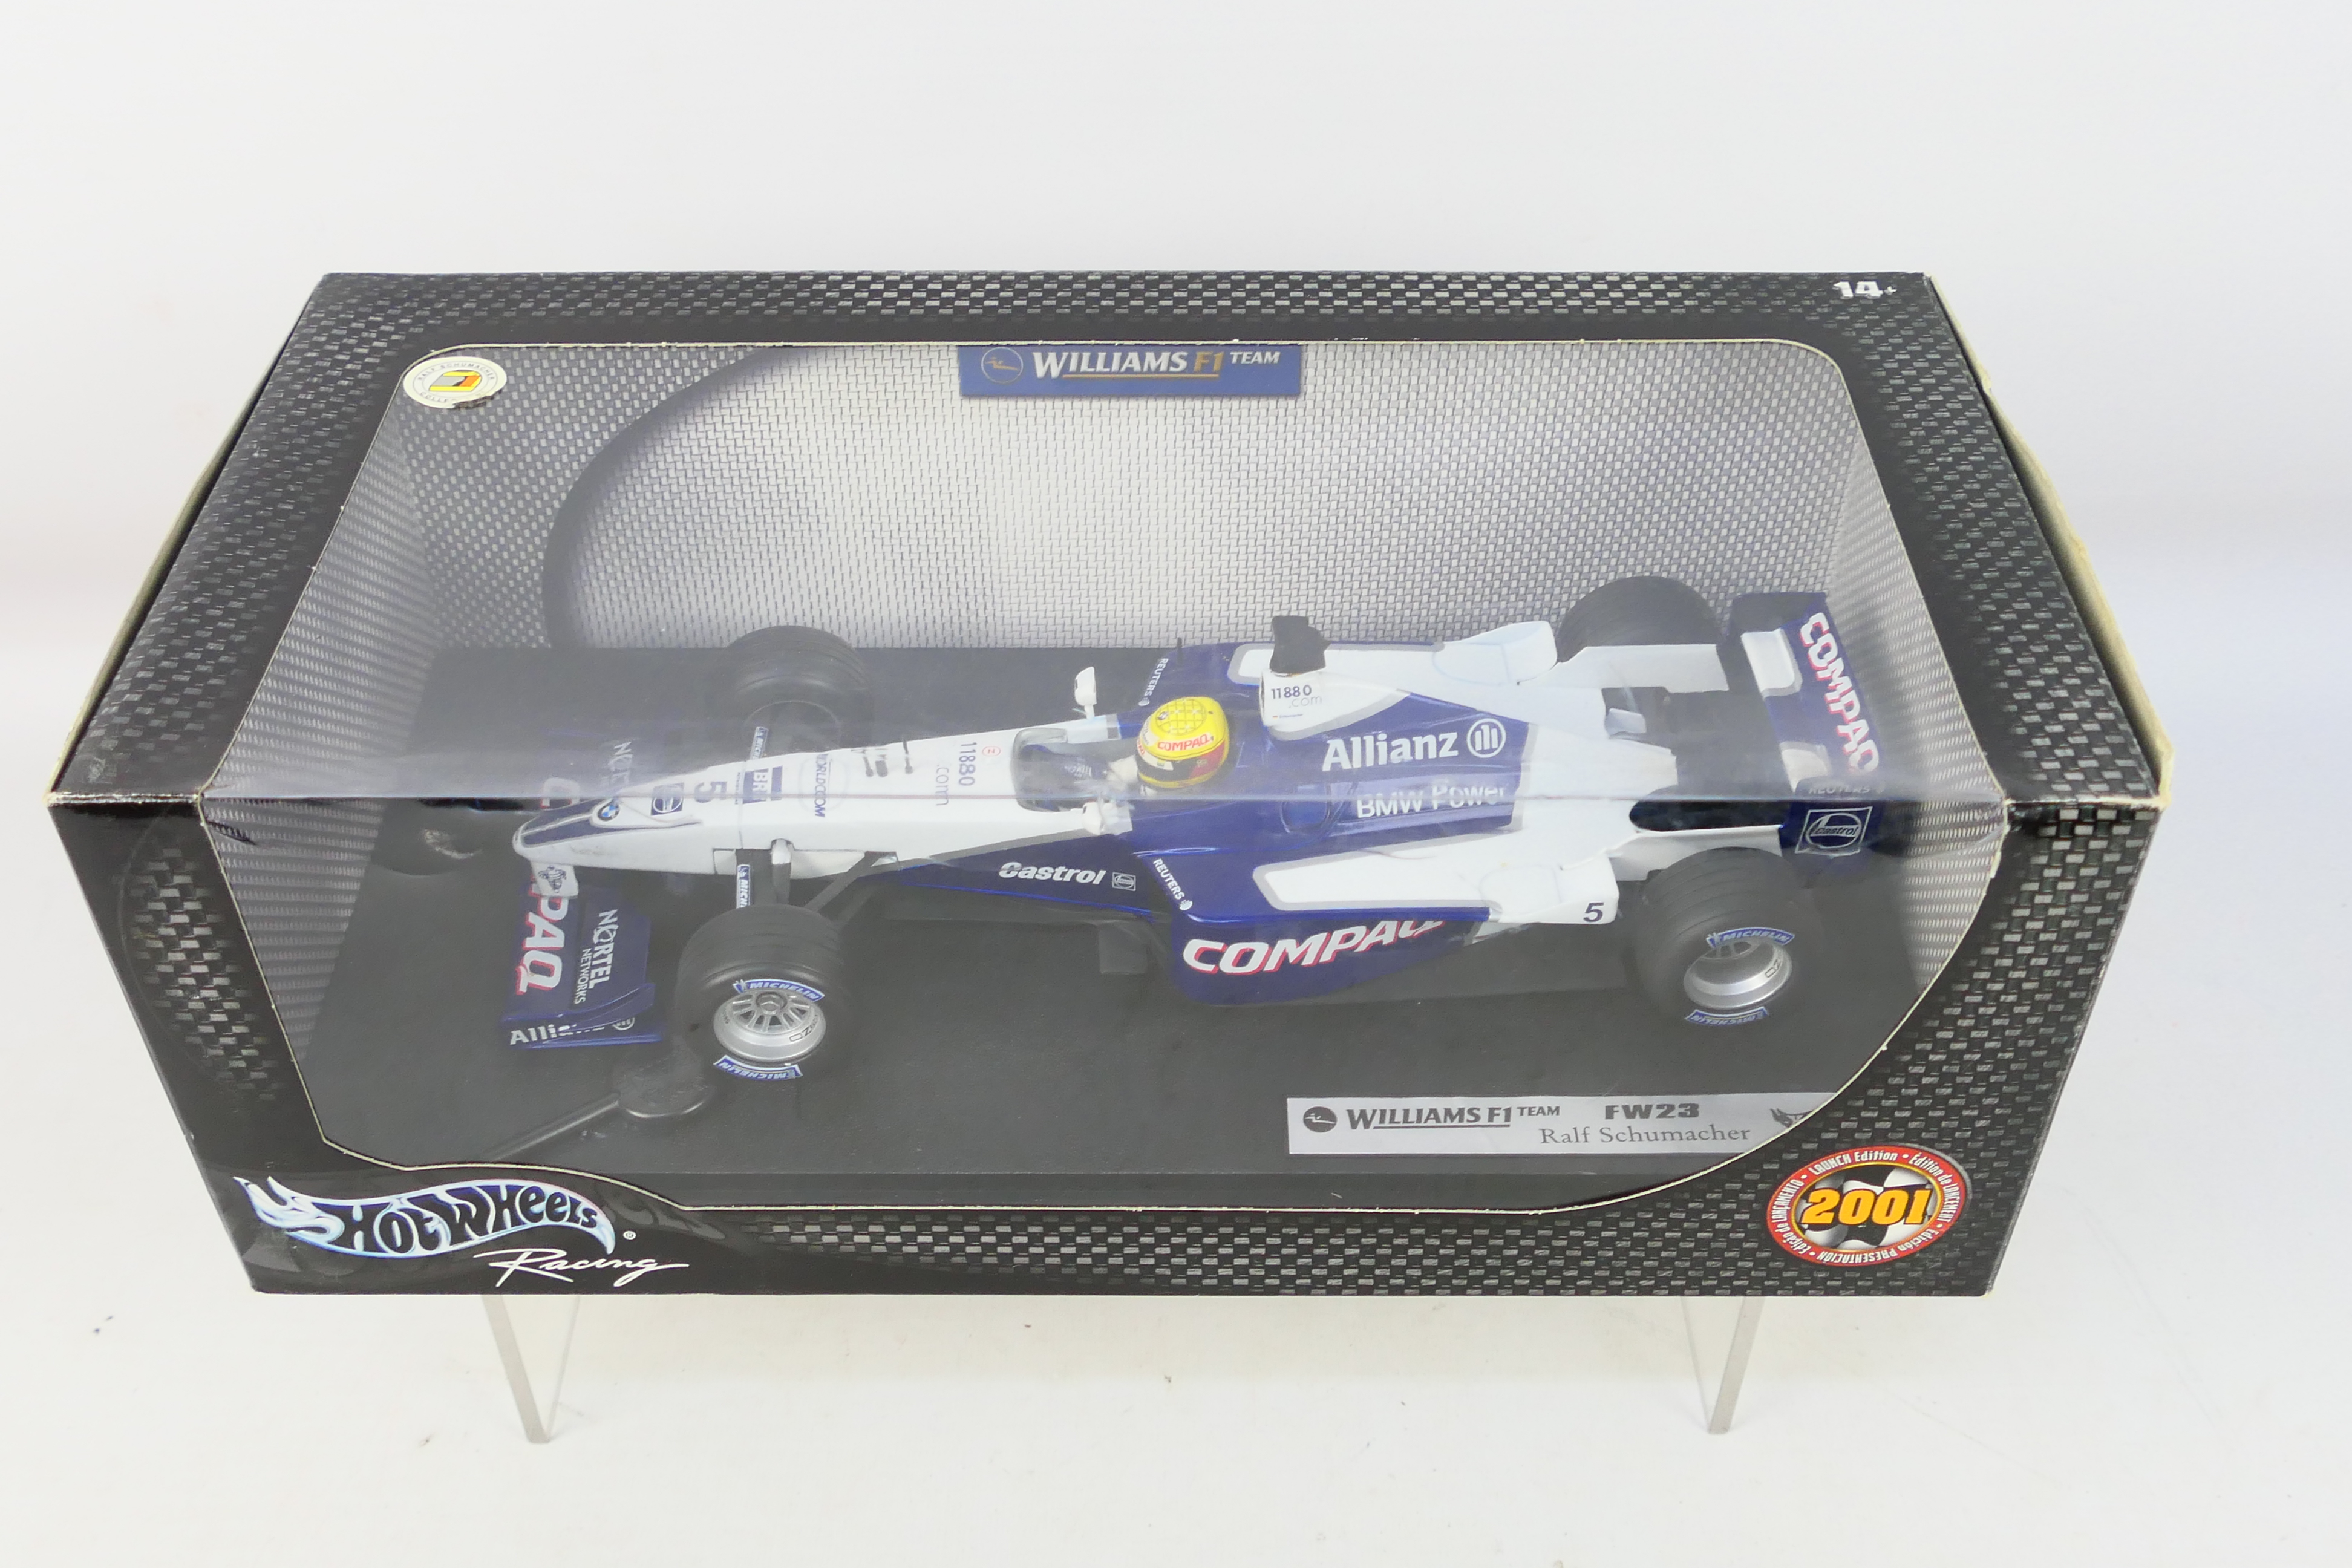 Hot Wheels - A boxed 1:18 scale Williams FW23 Ralf Schumacher 2001 F1 car # 50168. - Bild 3 aus 3